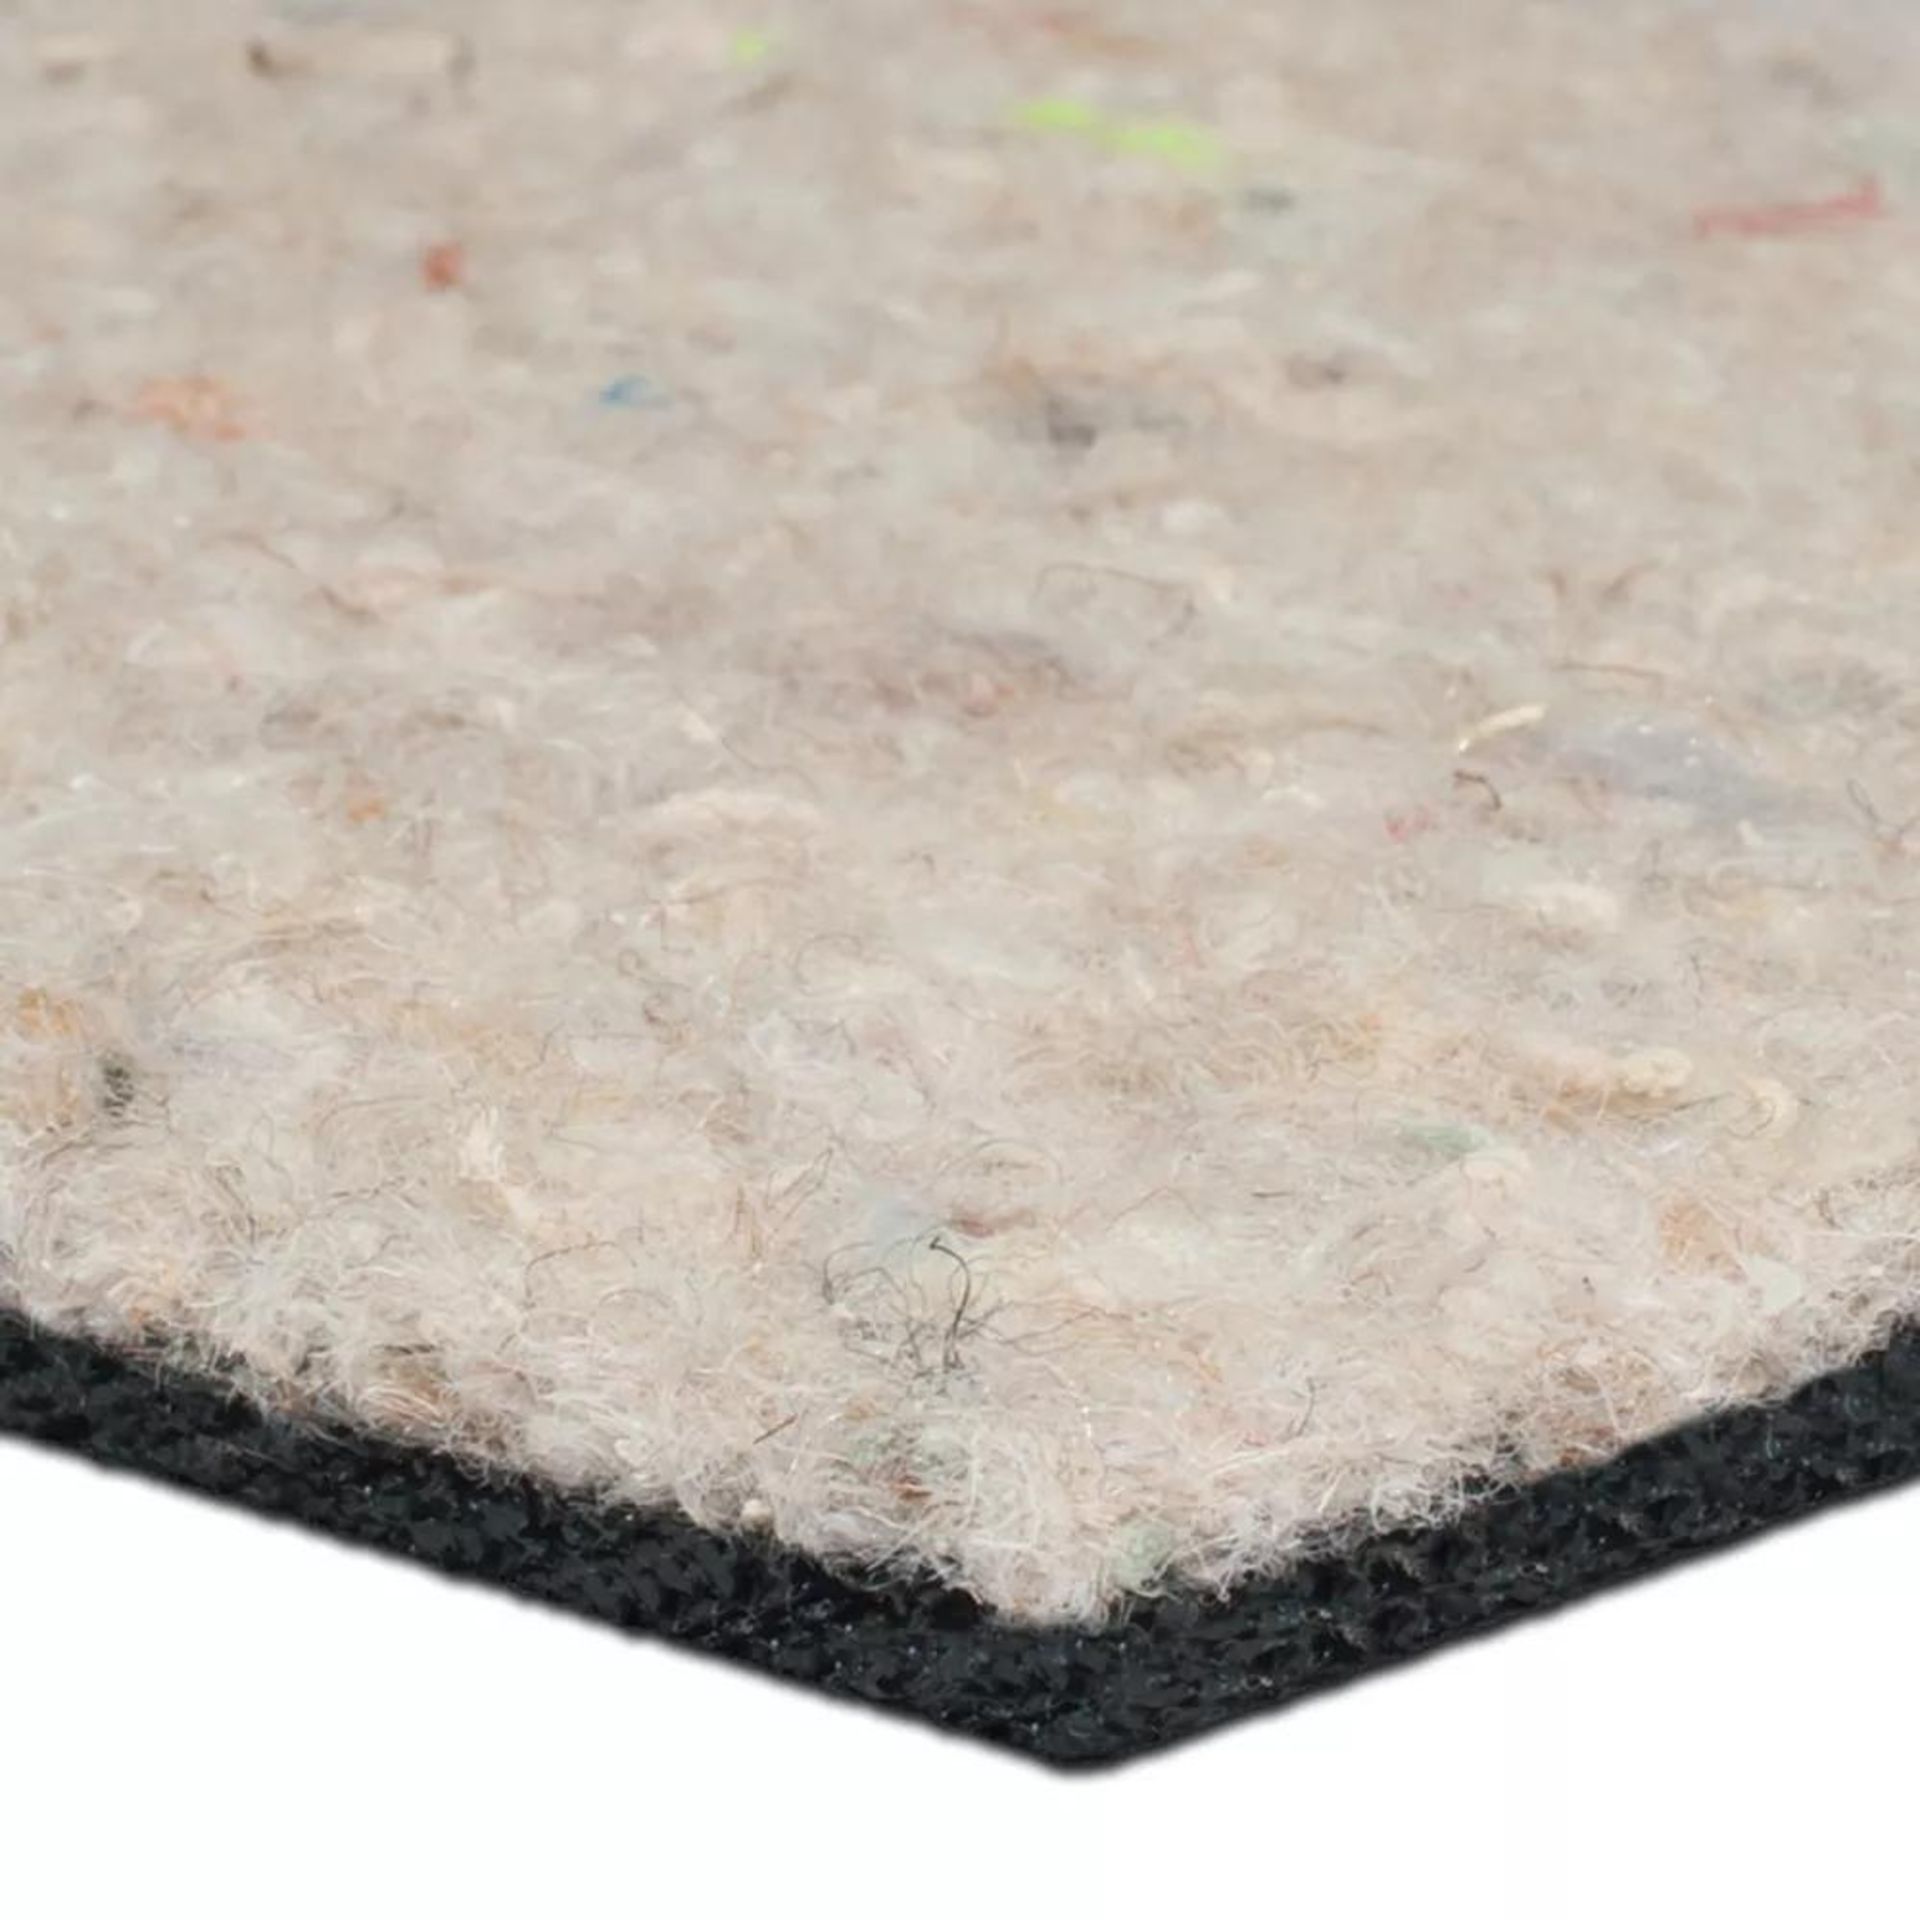 100 sq meters SRS sound reduction carpet underlay - Image 3 of 3